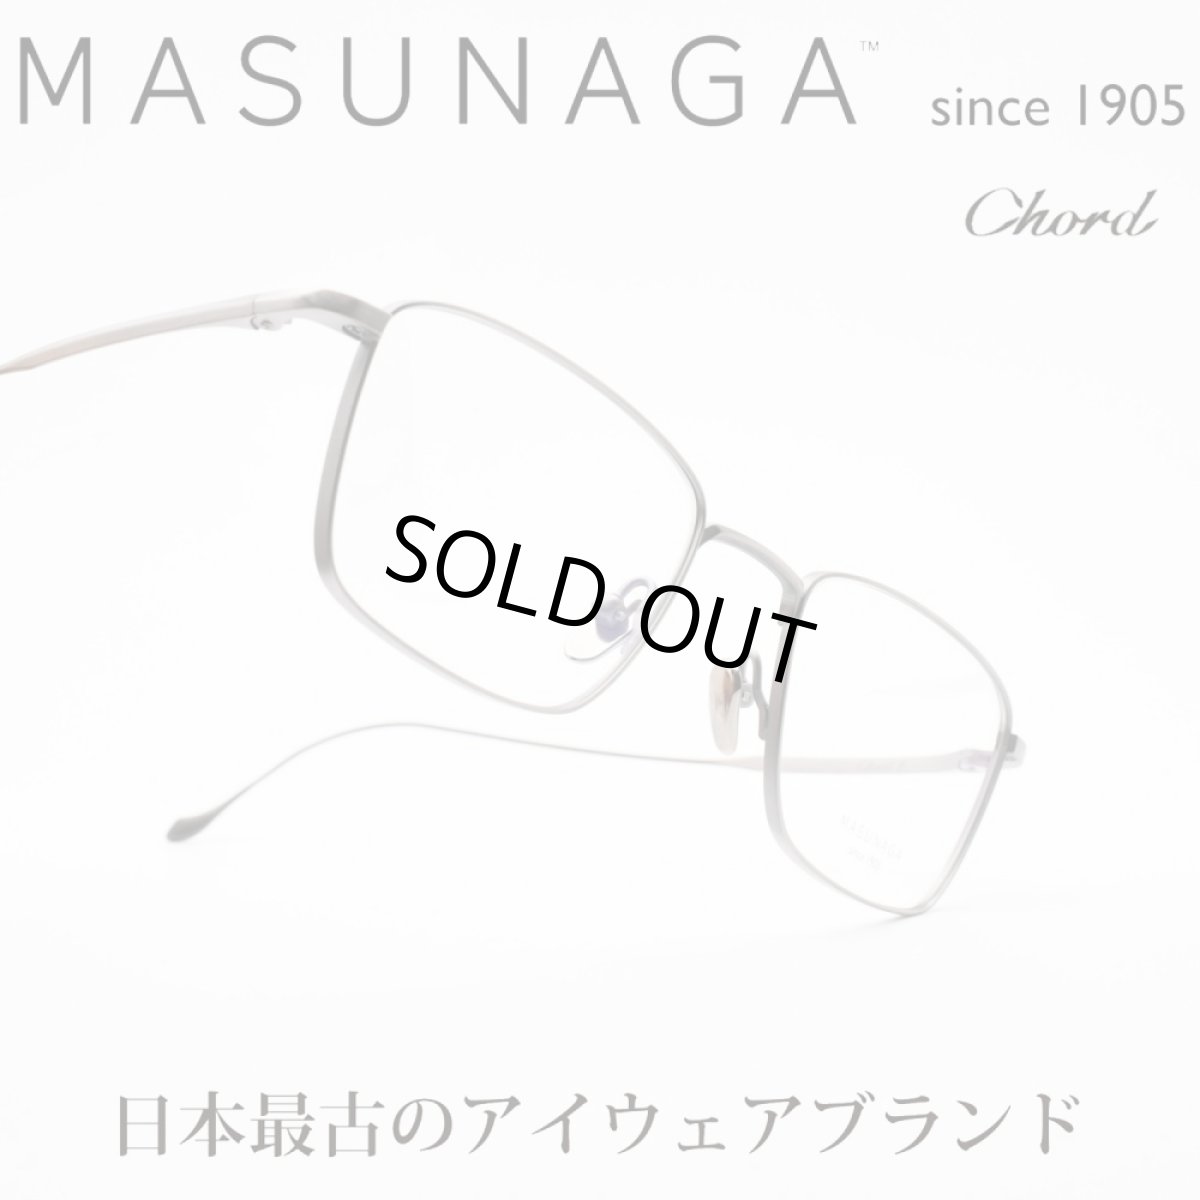 画像1: 増永眼鏡 MASUNAGA since 1905 Chord F col-22 (1)